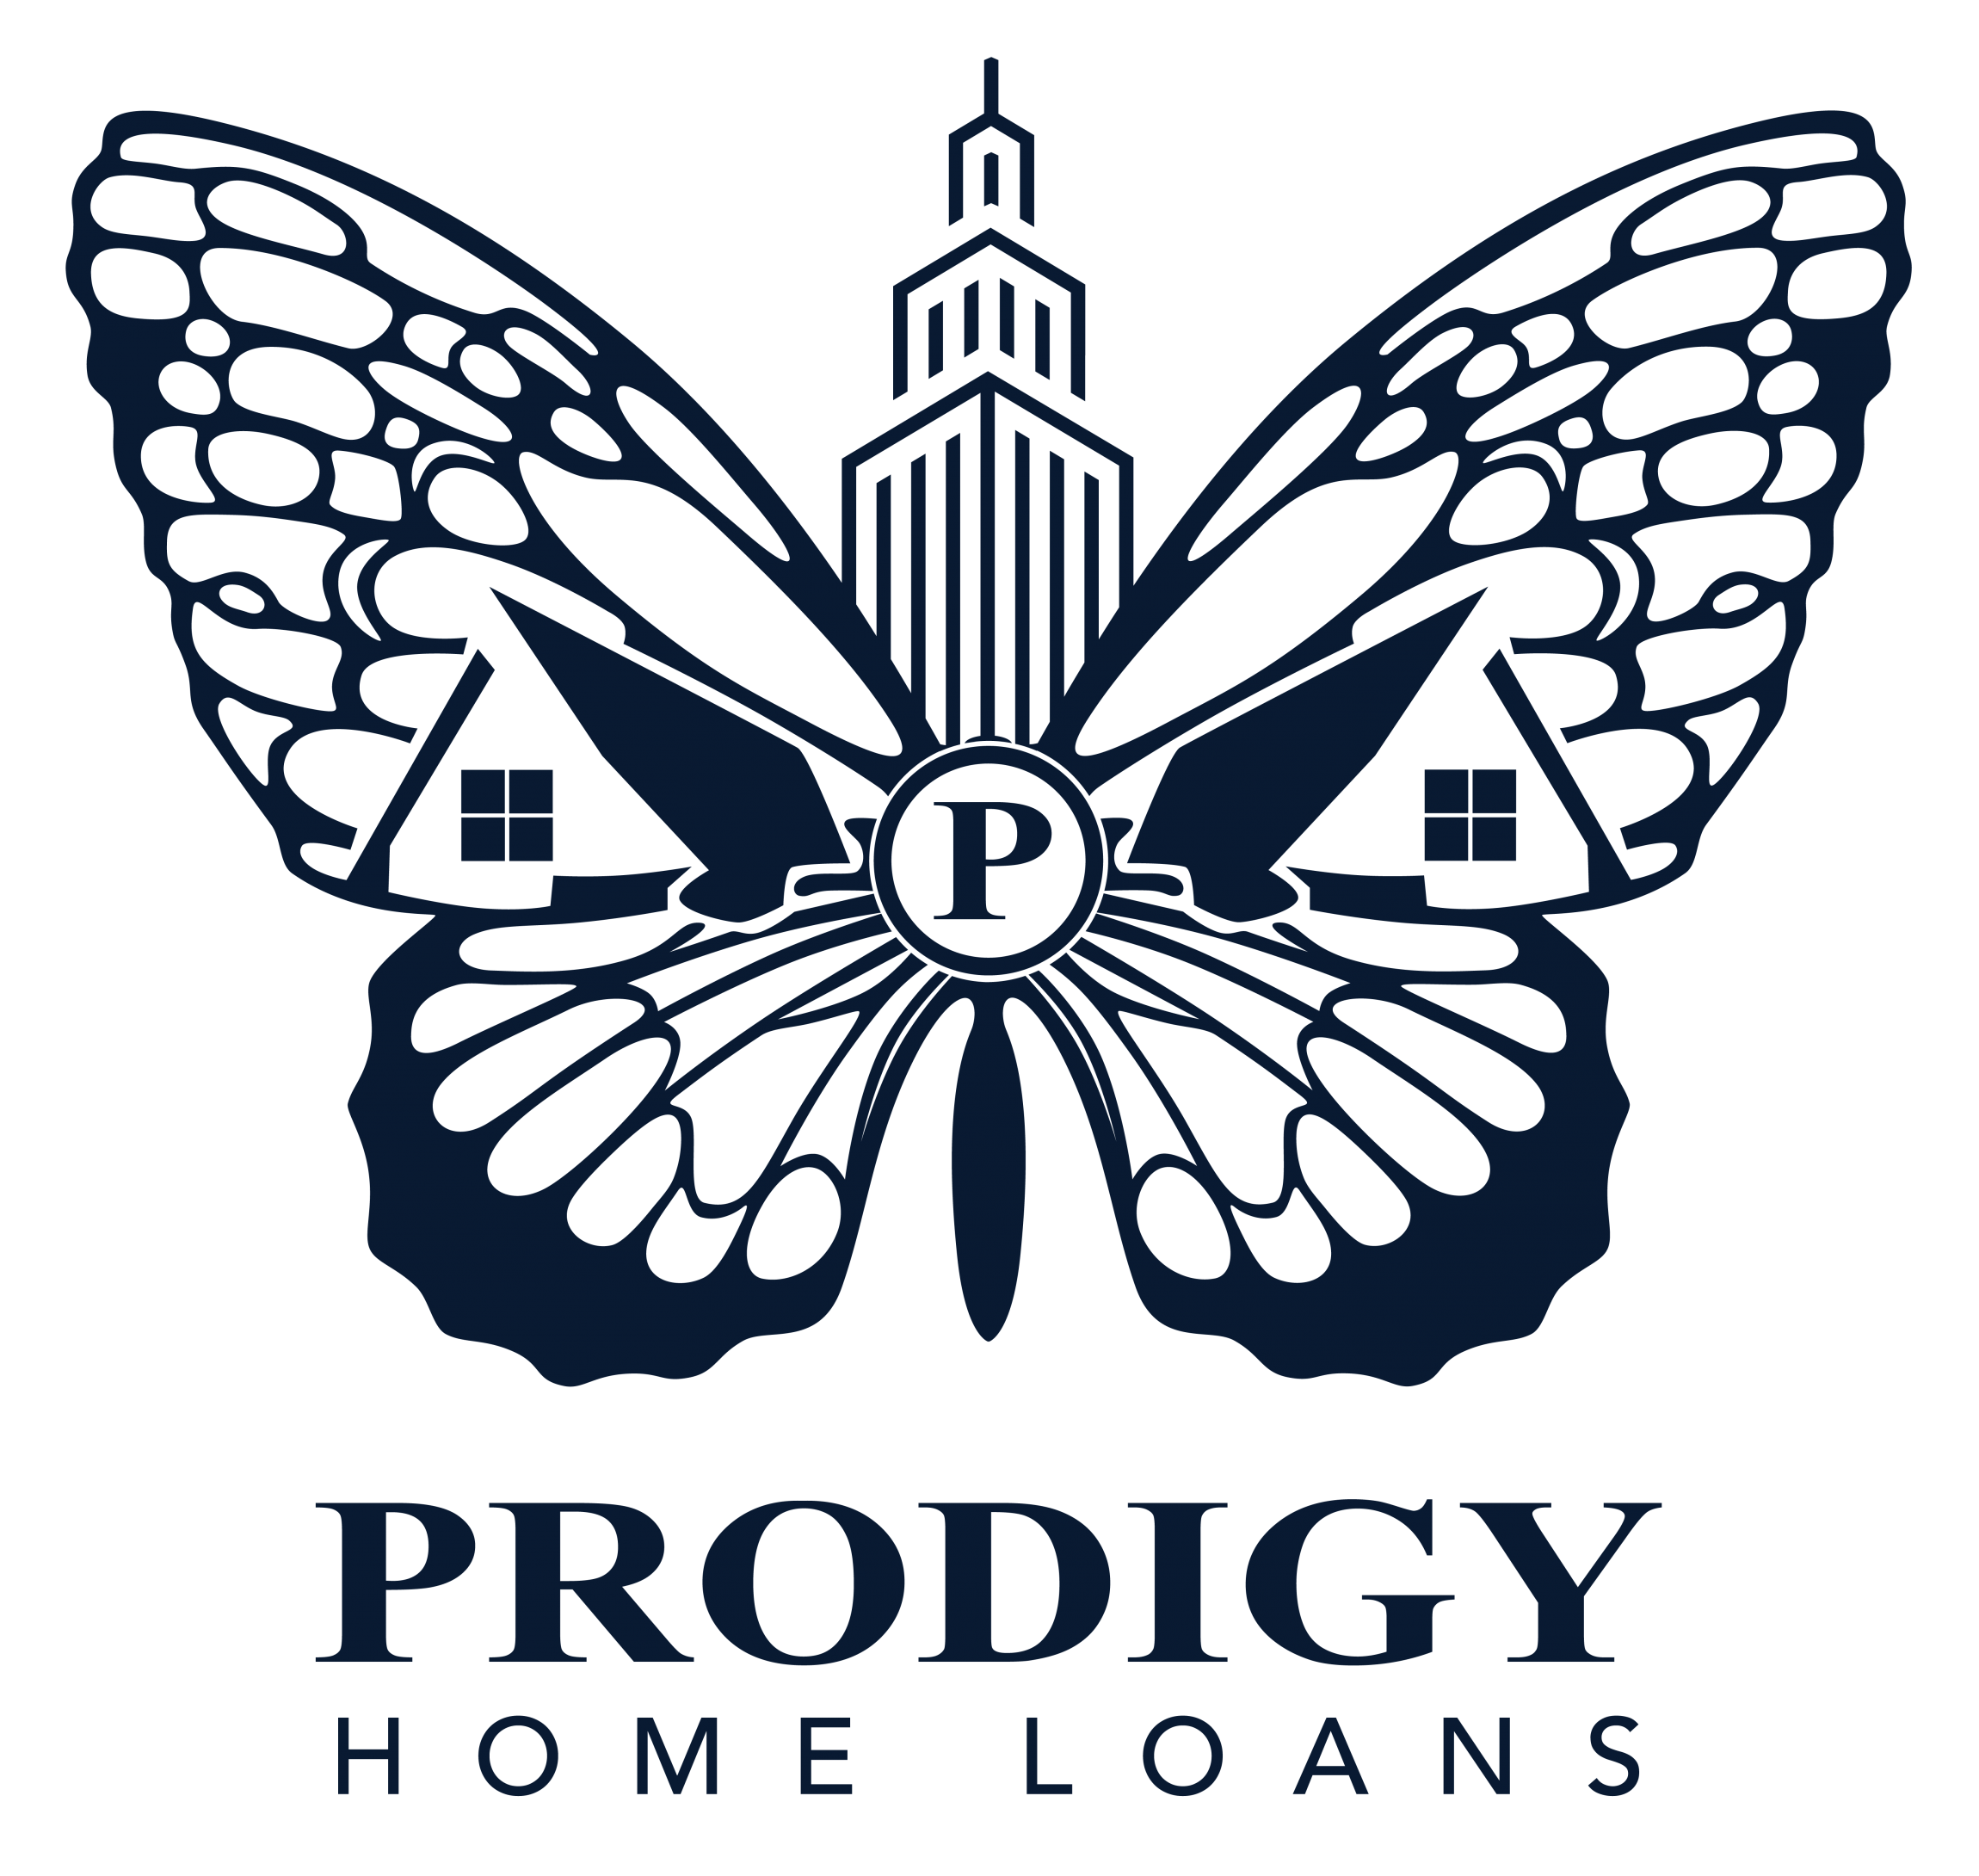 Prodigy Home Loans